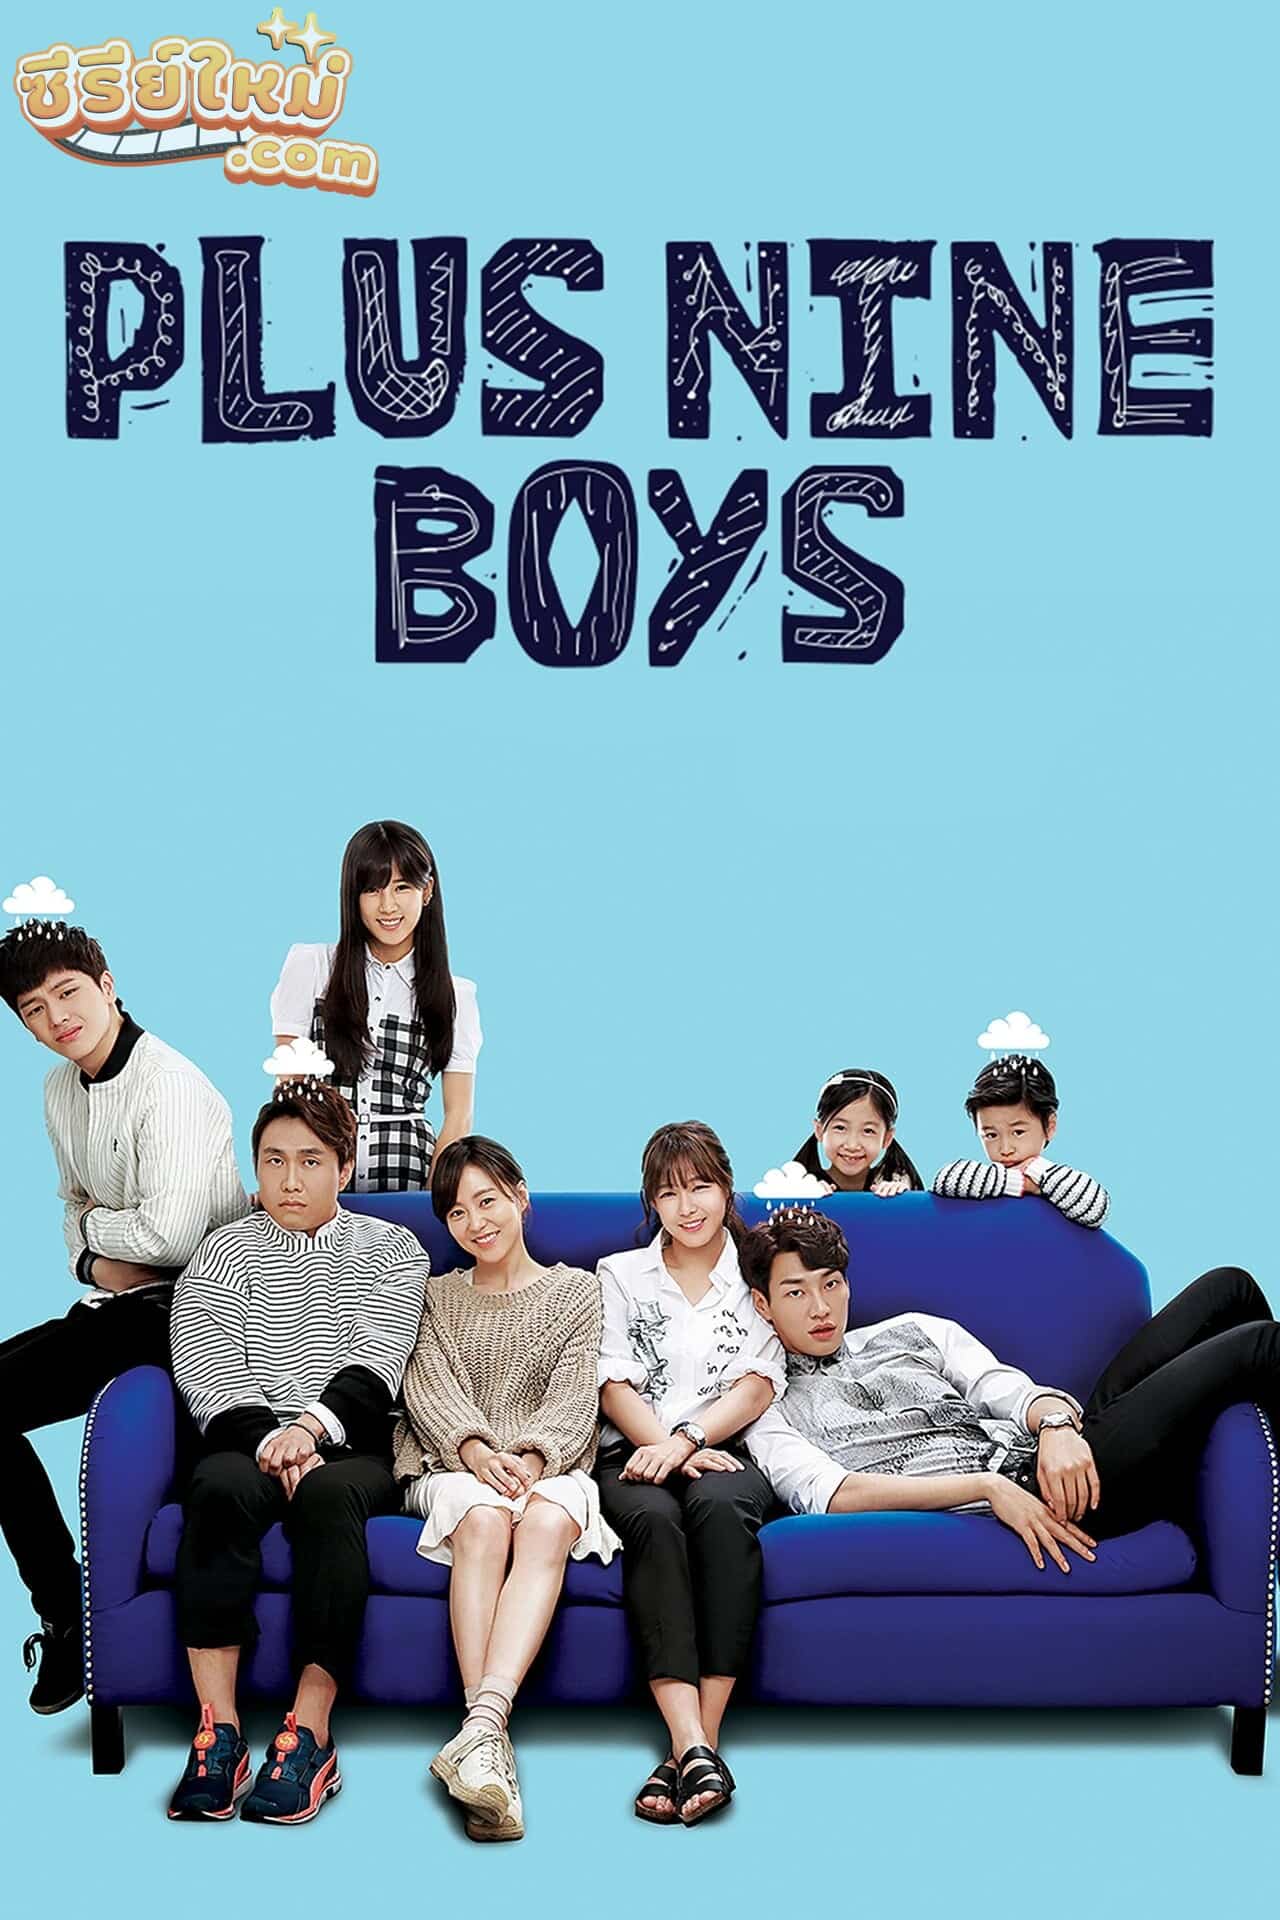 Plus Nine Boys อาถรรพ์รักคุณชายหมายเลข 9 (2014)